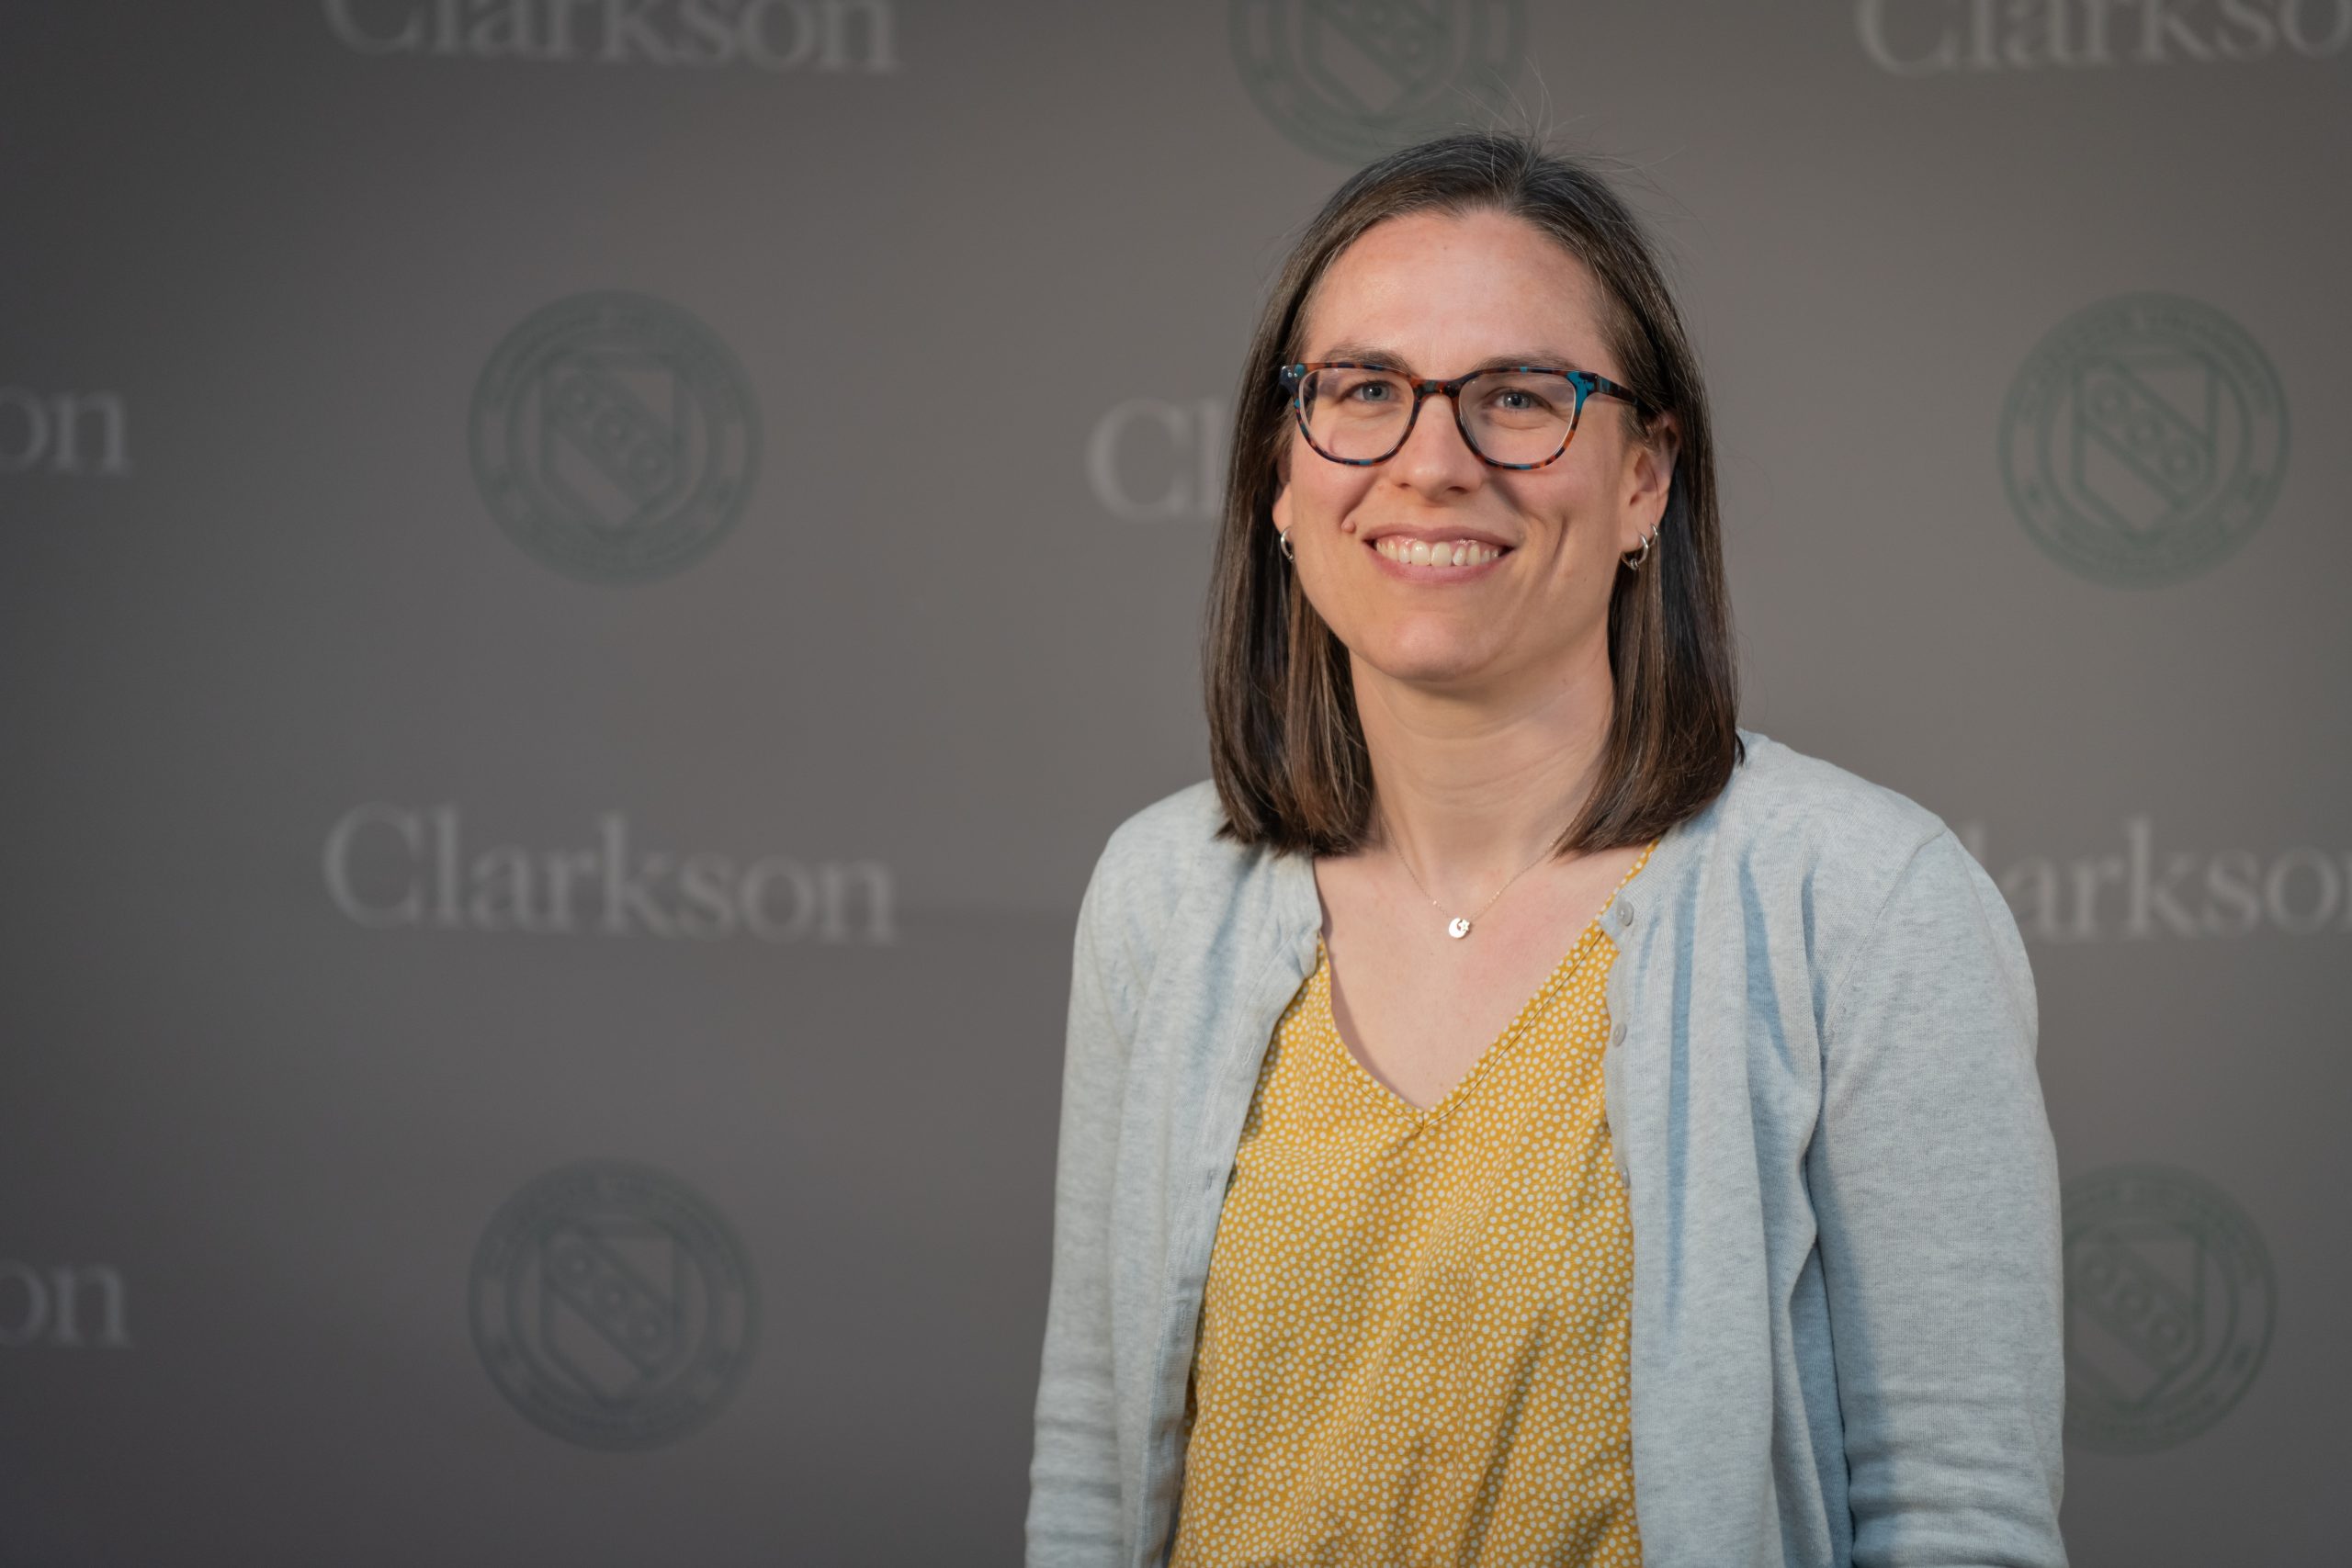 Susan Bailey Receives Tenure, Promotion at Clarkson University